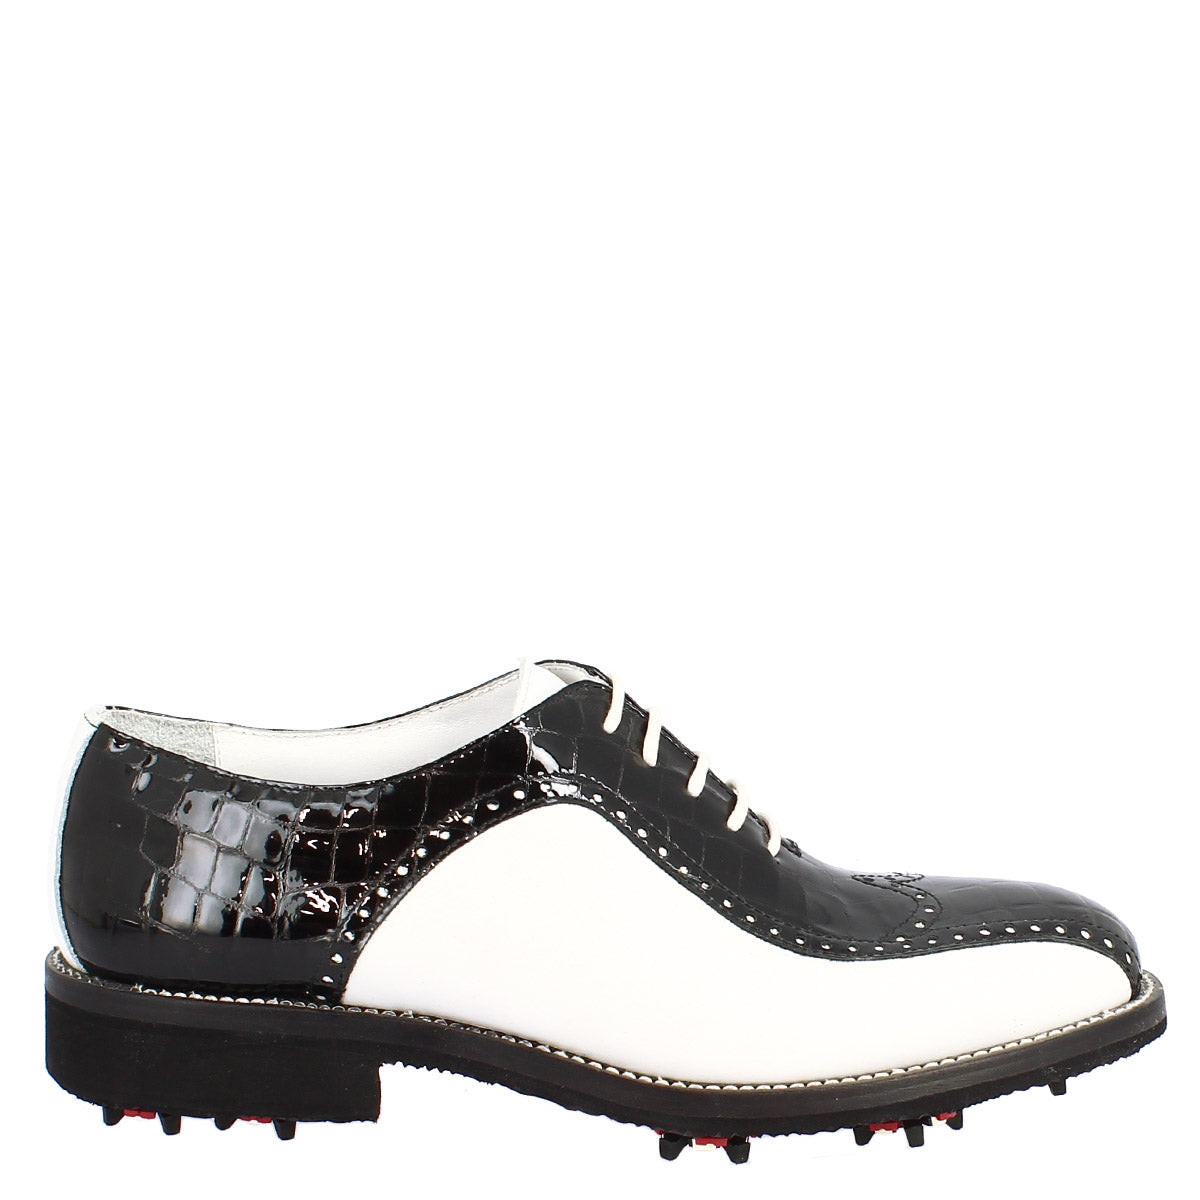 Handmade women's golf shoes in black crocodile white full-grain leather